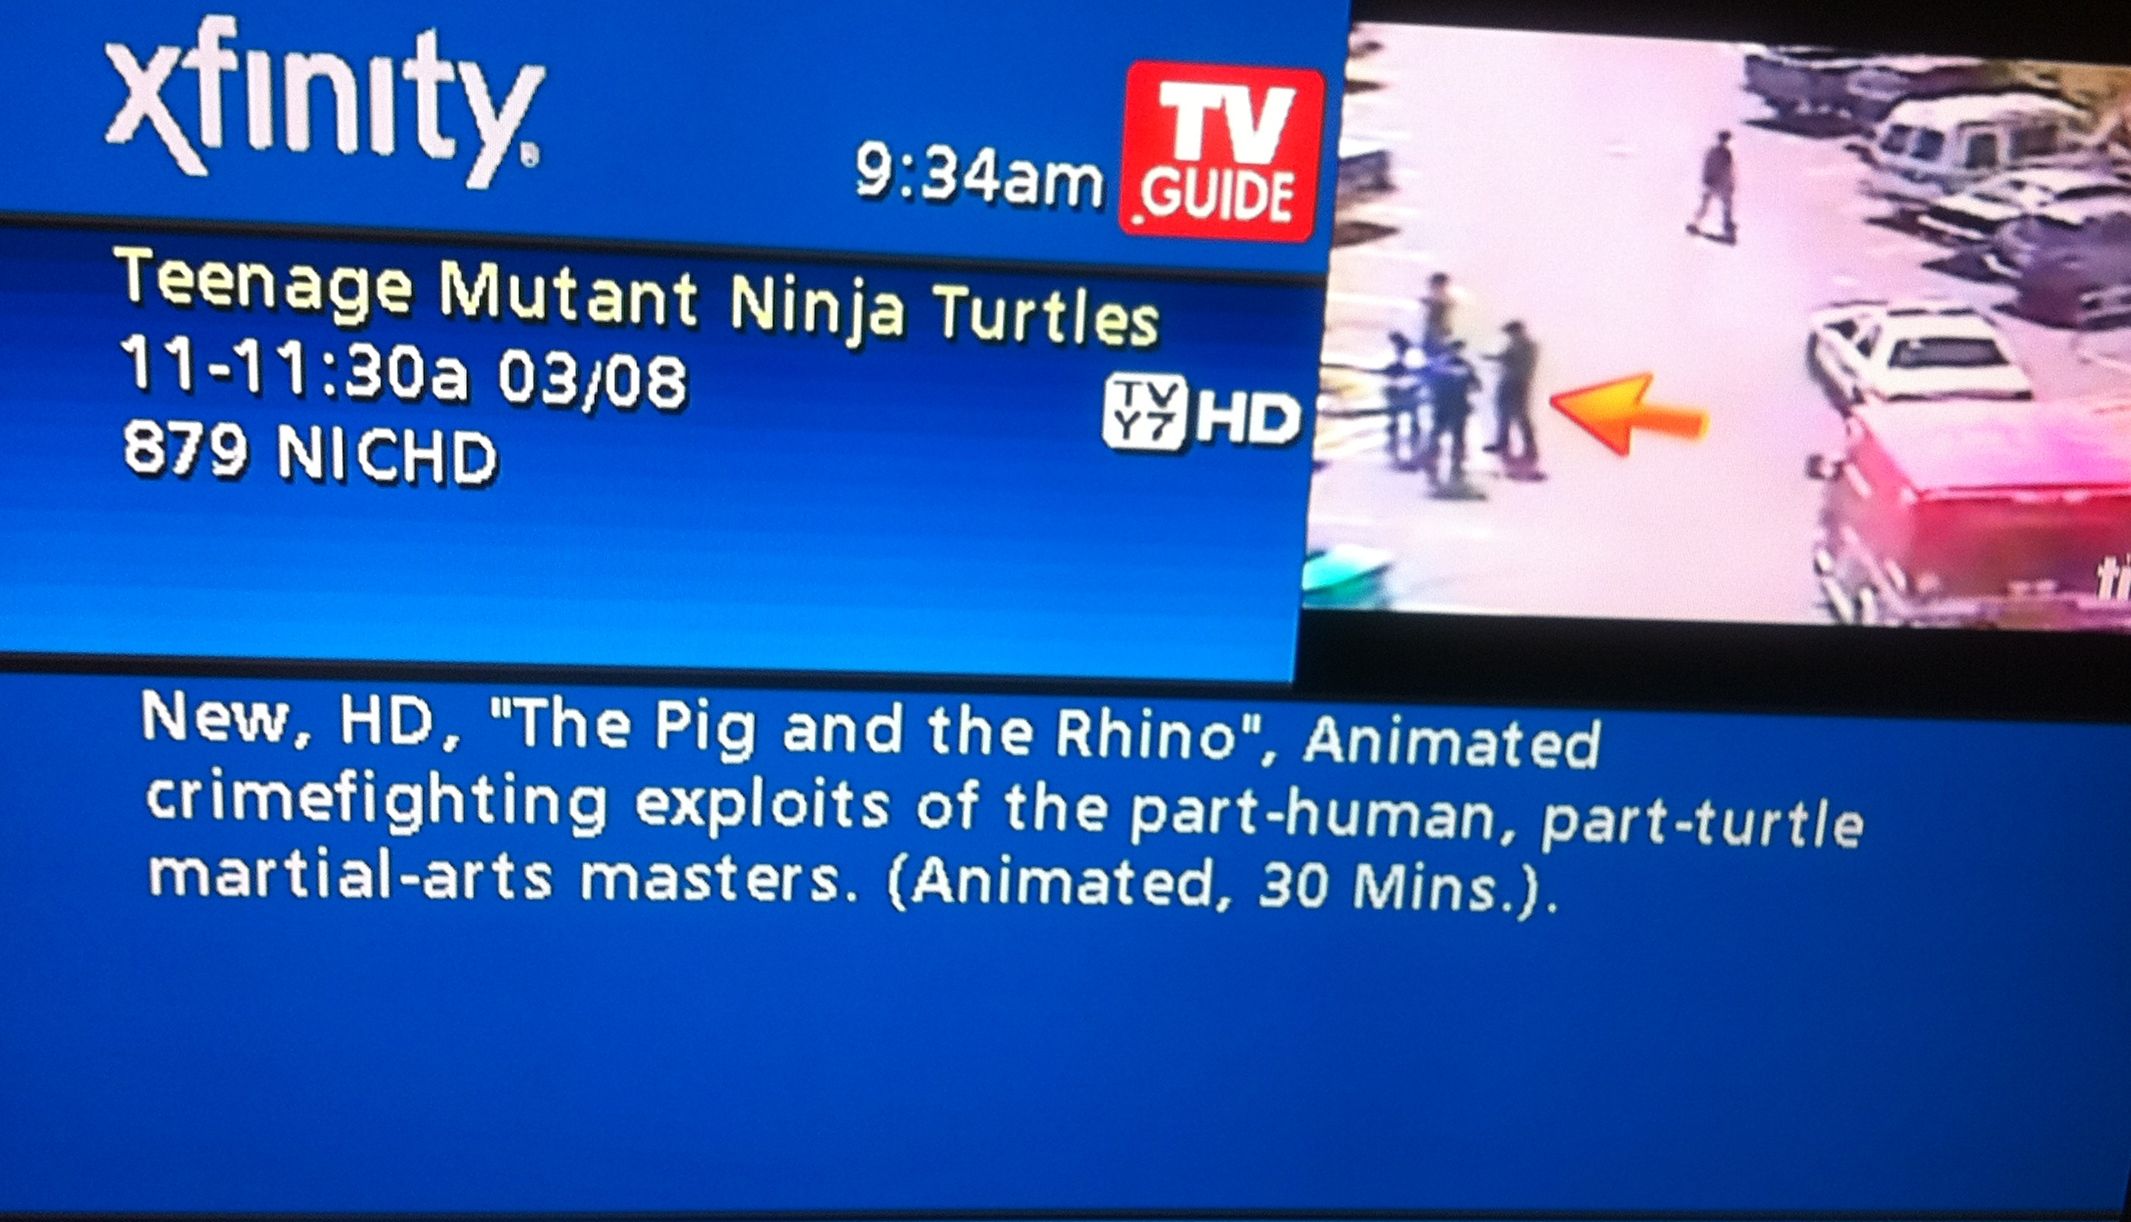 ninja turtles episode guide 2015